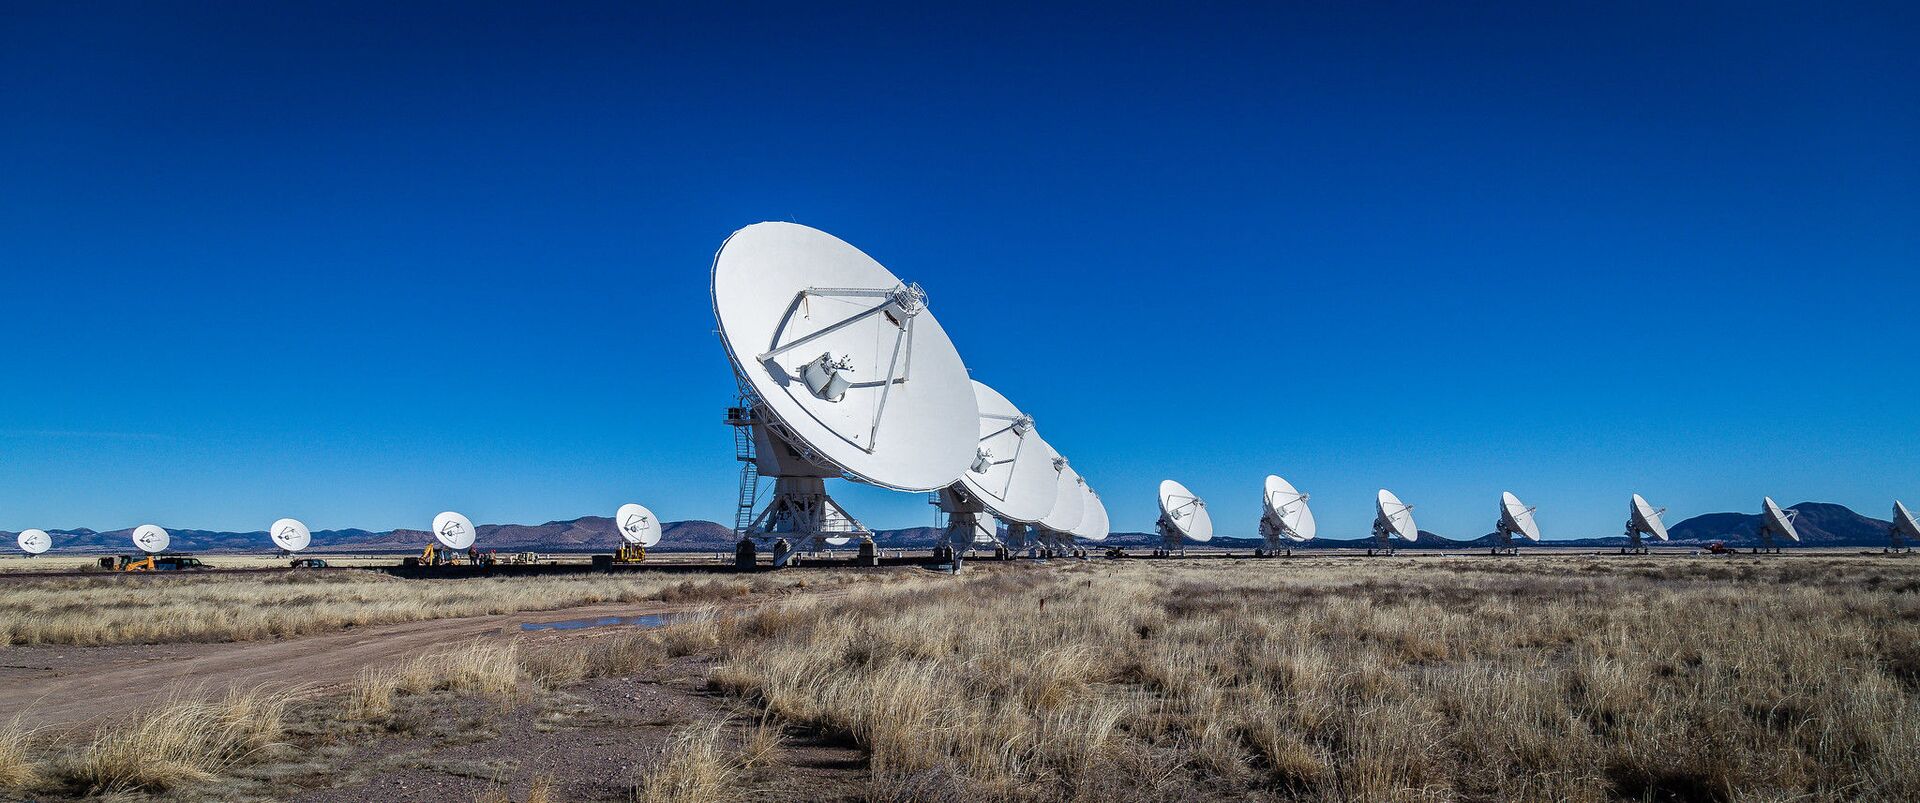 The National Radio Astronomy Observatory's Very Large Array (VLA) telescope in New Mexico - Sputnik International, 1920, 15.10.2021